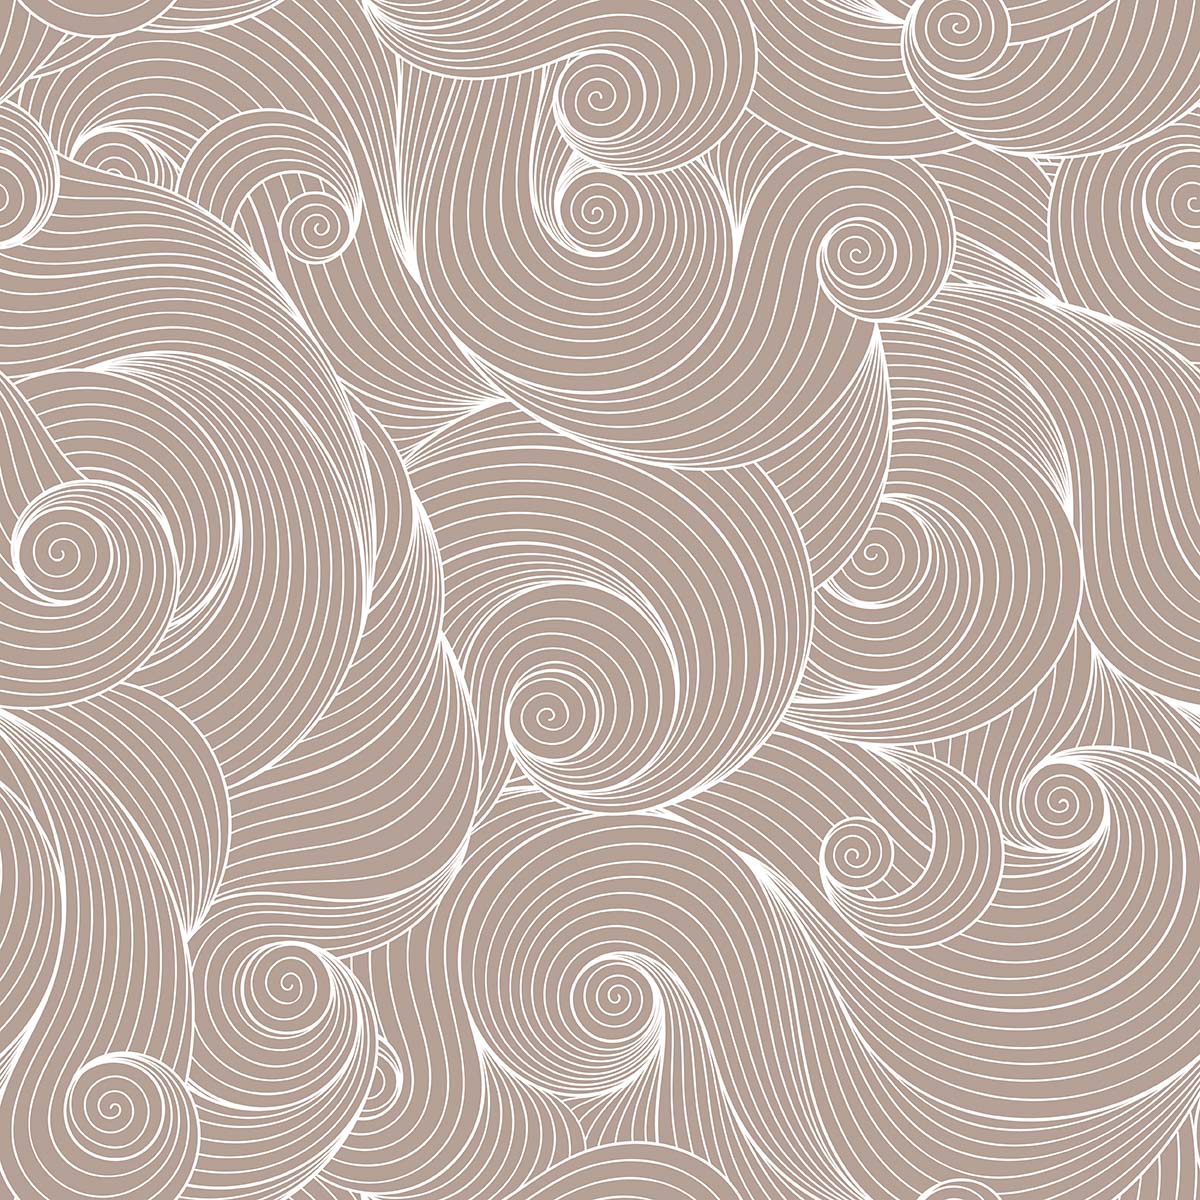 A pattern of swirls and curls